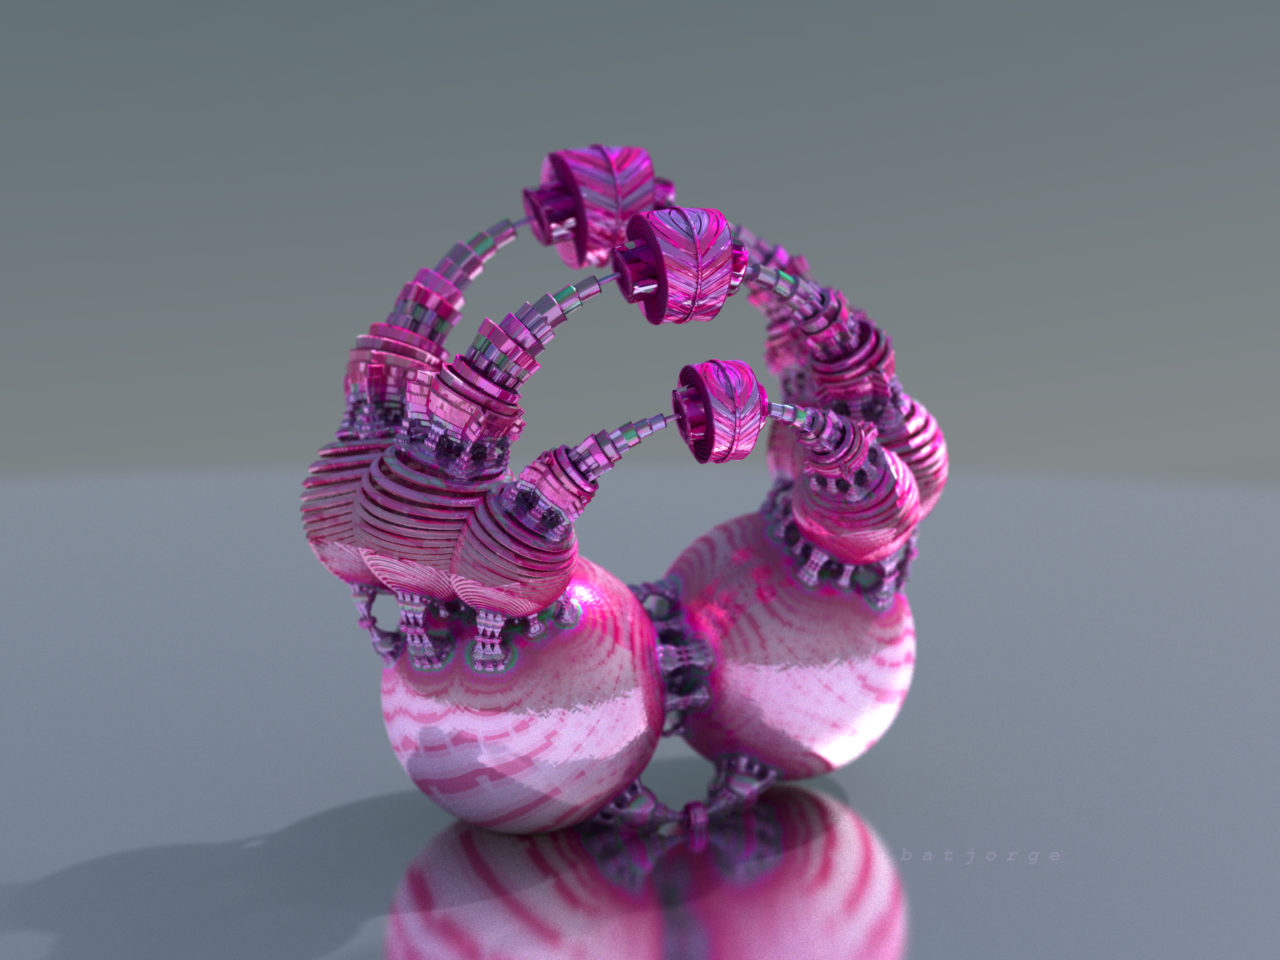 3D fractal orb. mandelbulber pseudokleinian blockified